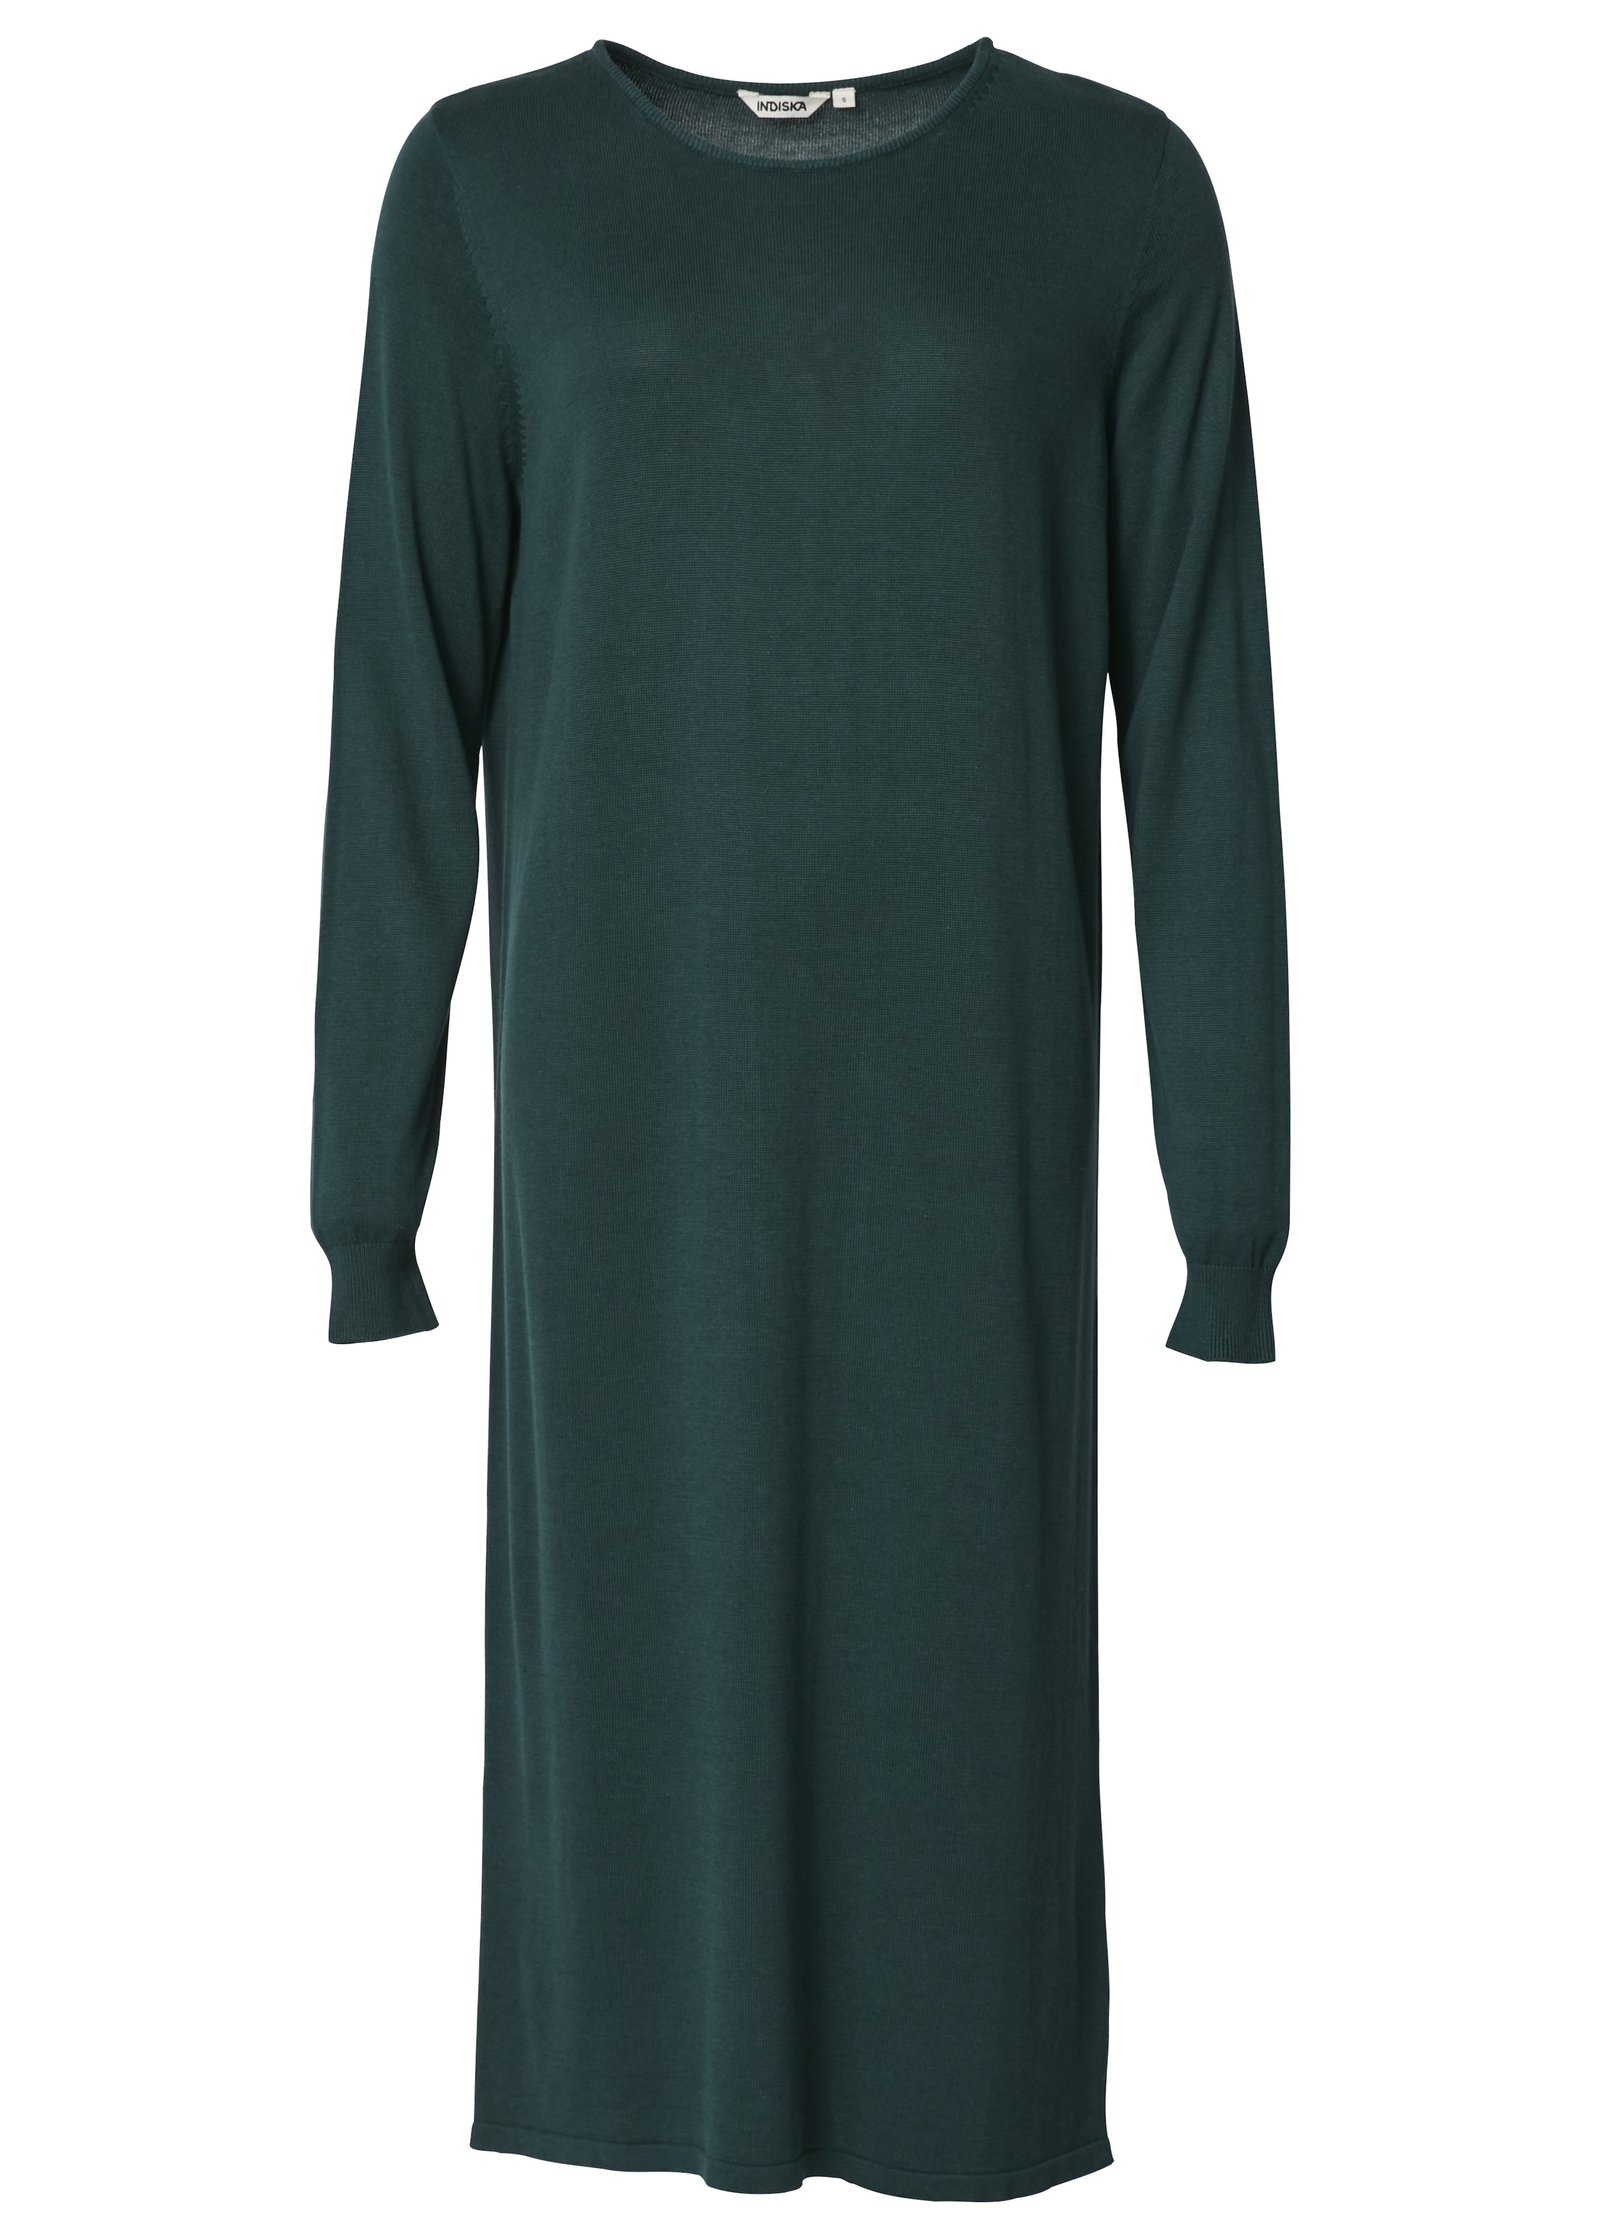 Knitted long-sleeved dress